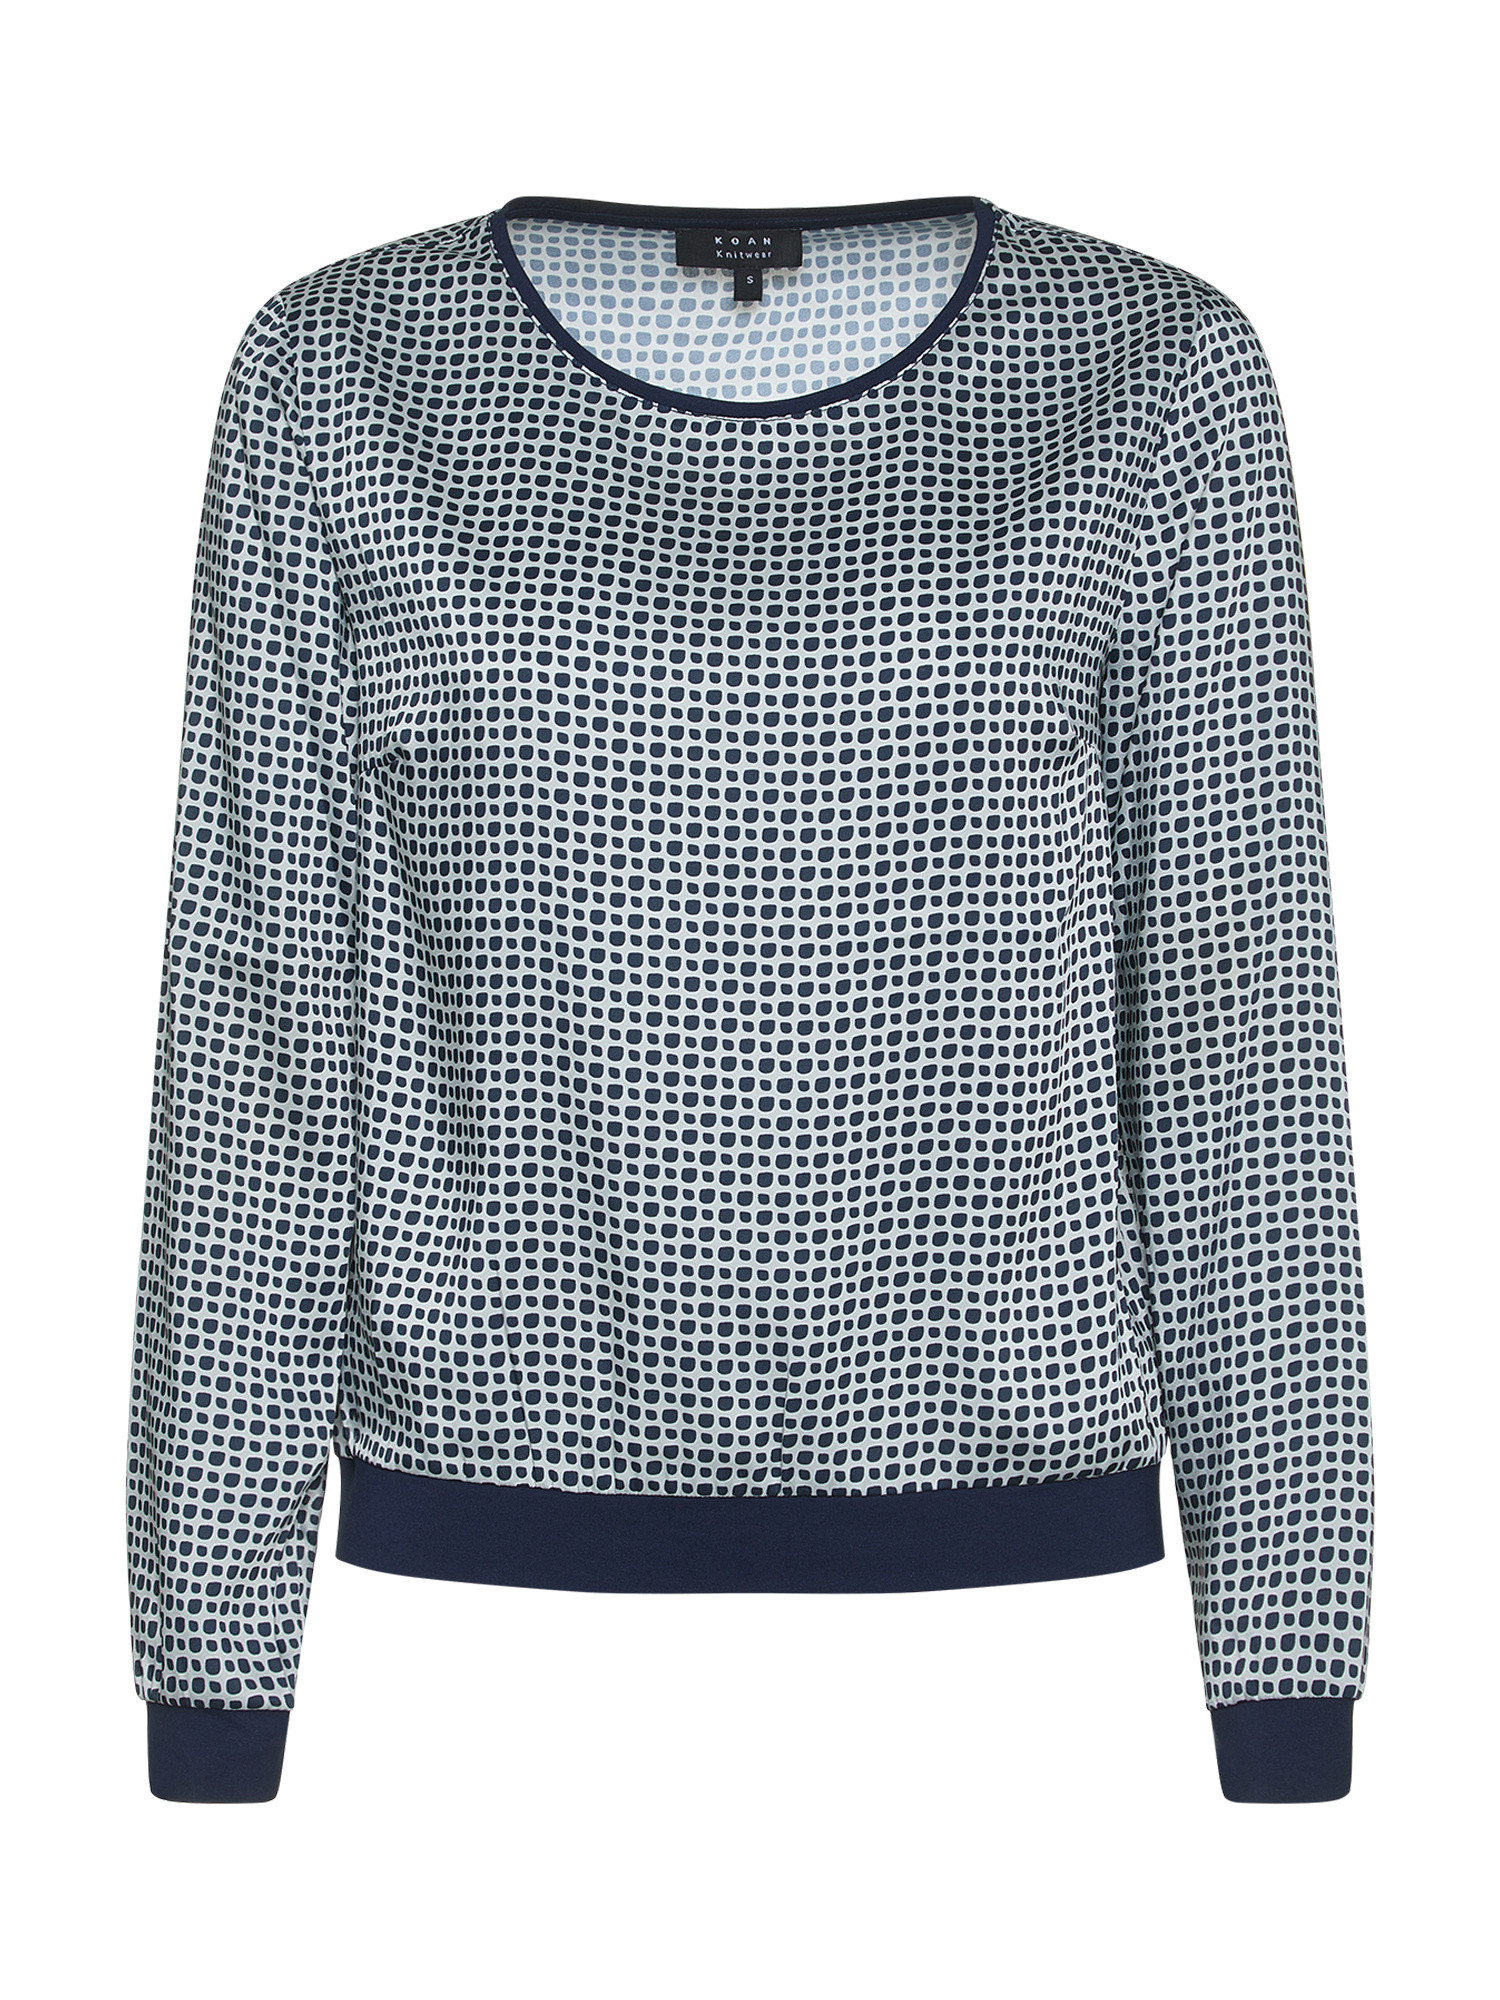 Koan - Patterned blouse, Pearl Grey, large image number 0